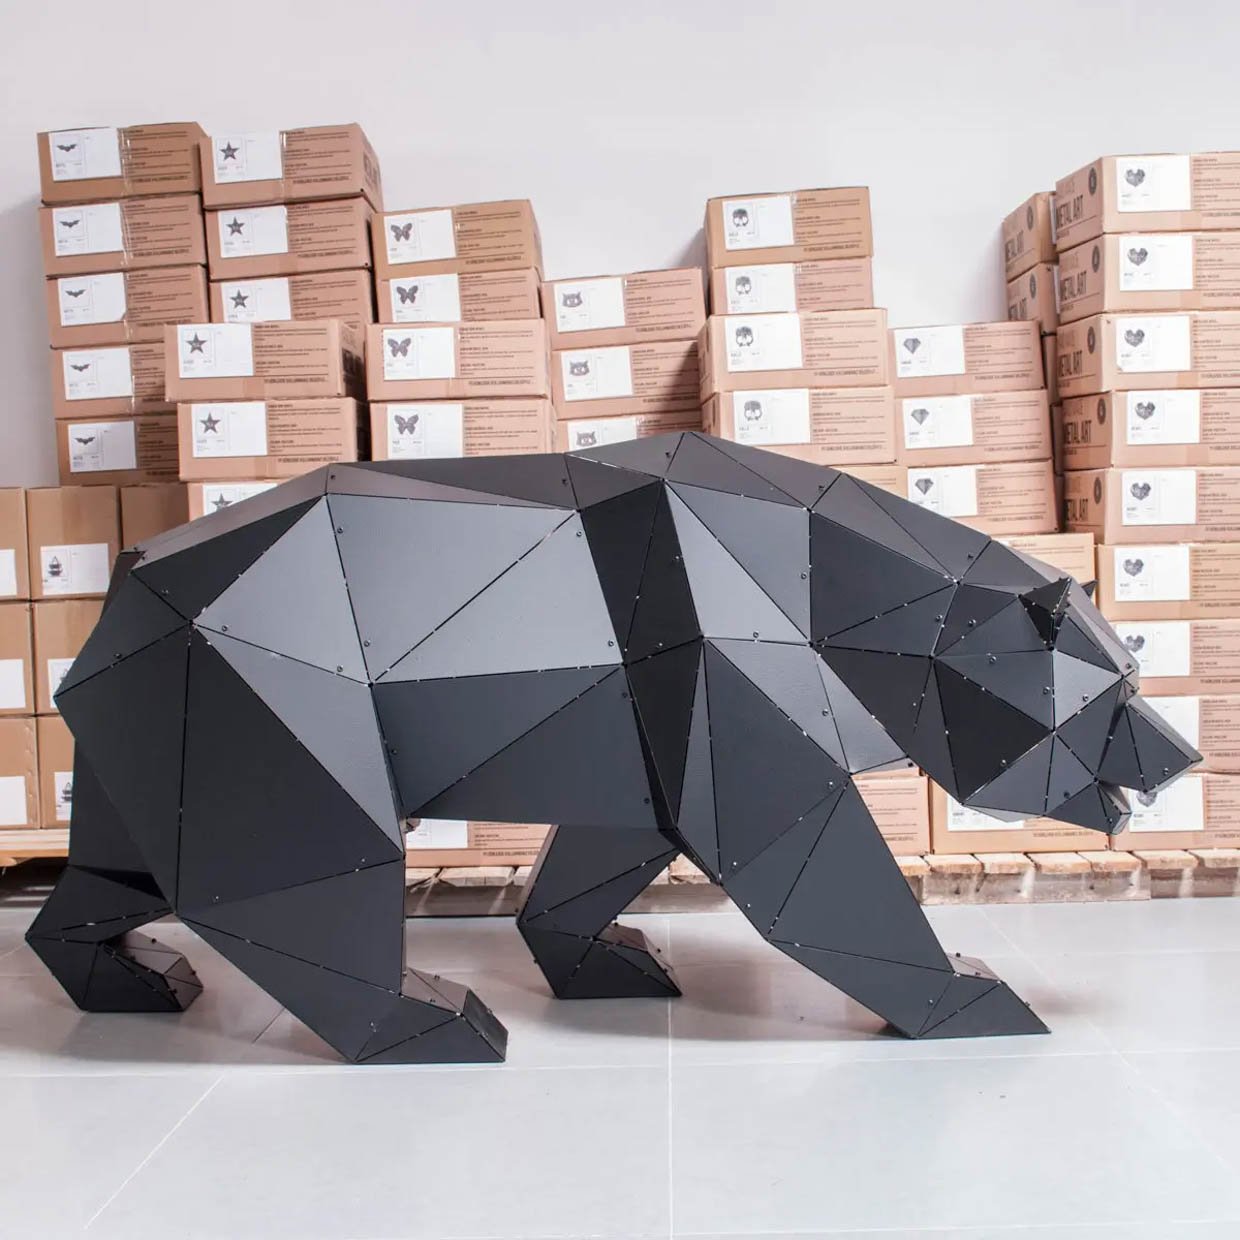 3D XL Geometric Animal Sculptures